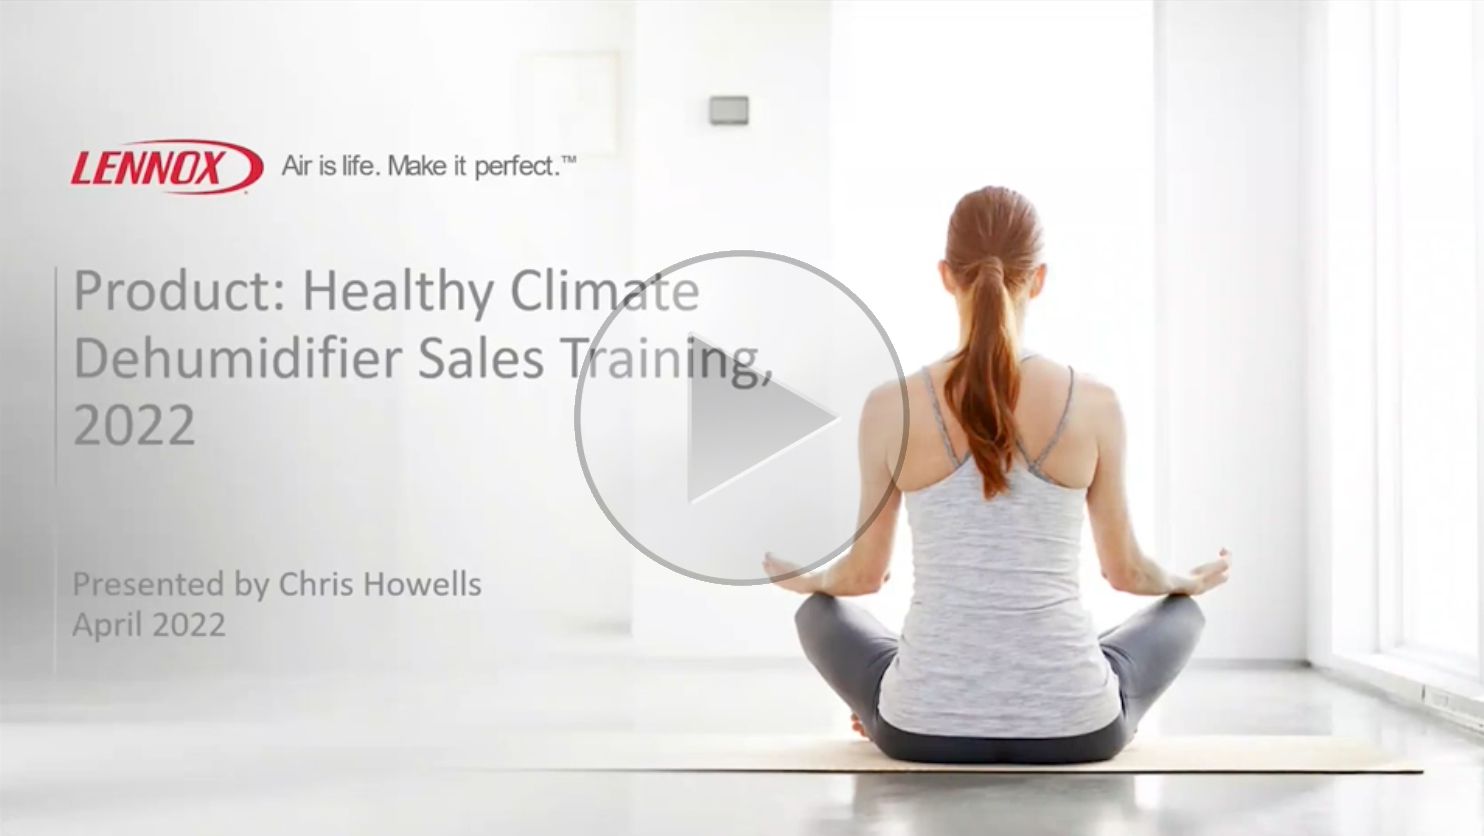 Lennox healthy climate dehumidifier sales training class.